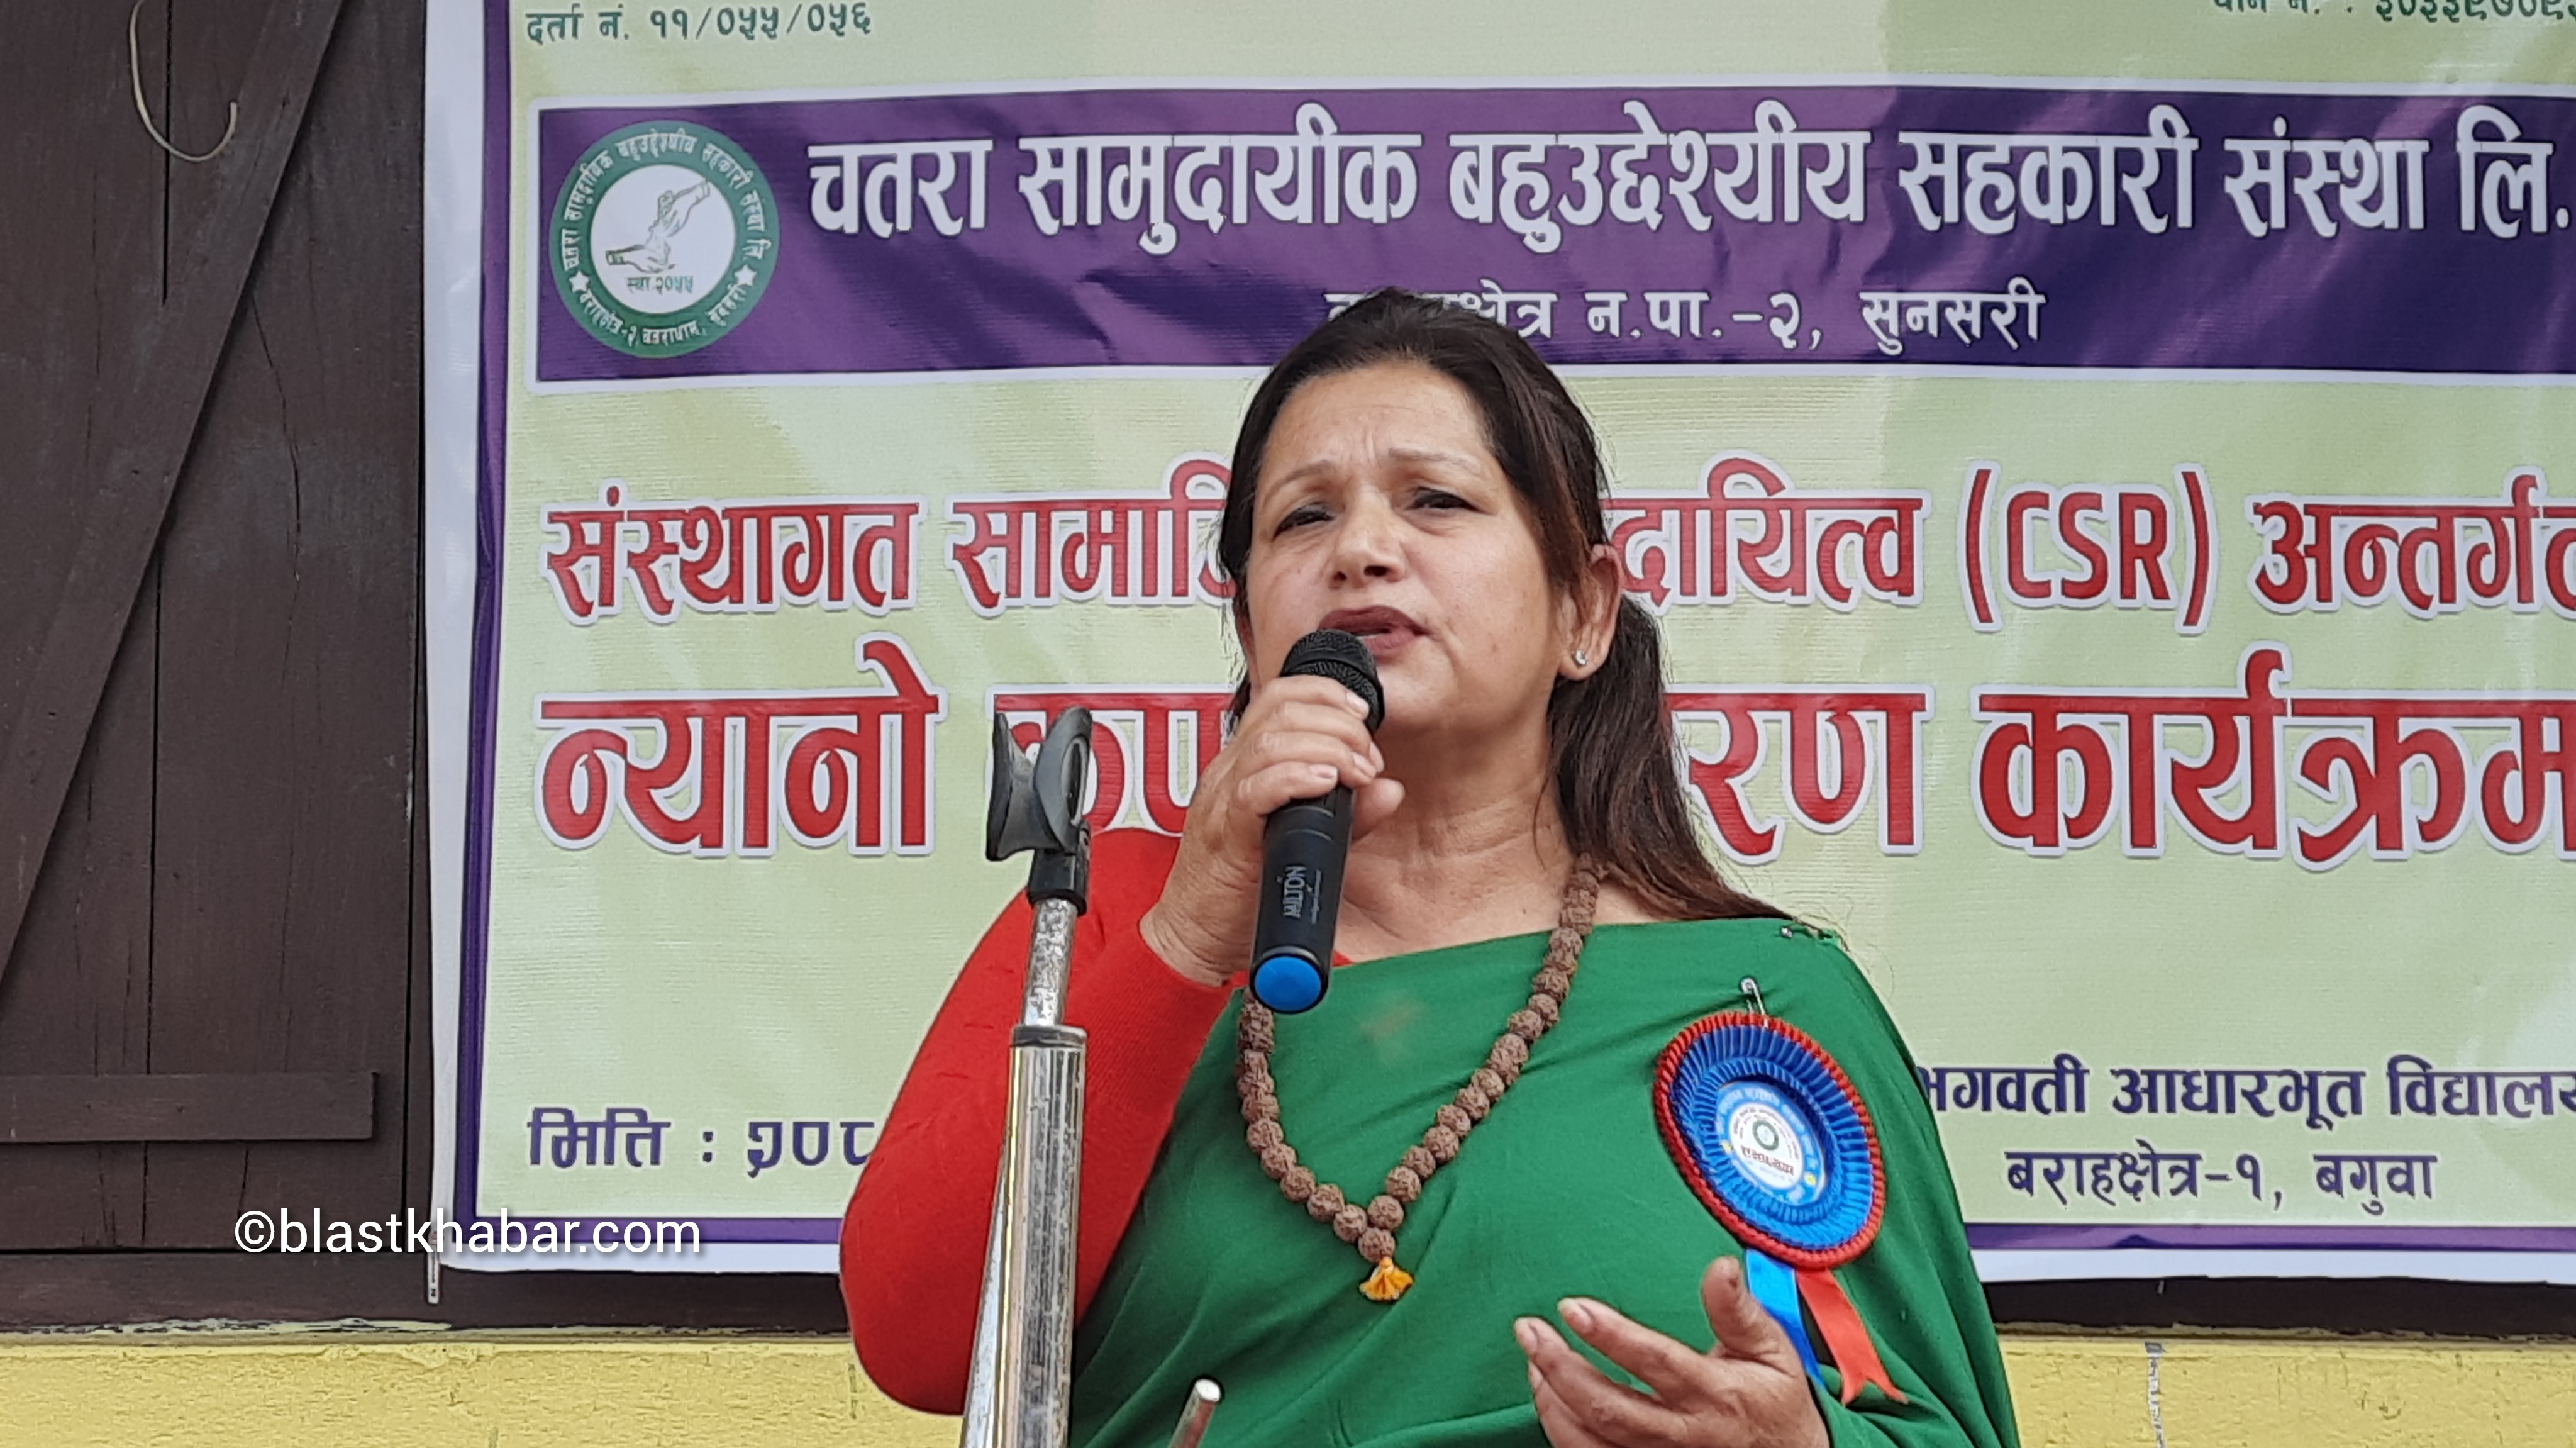 Sita Bhandari paudel Chatara sahakari